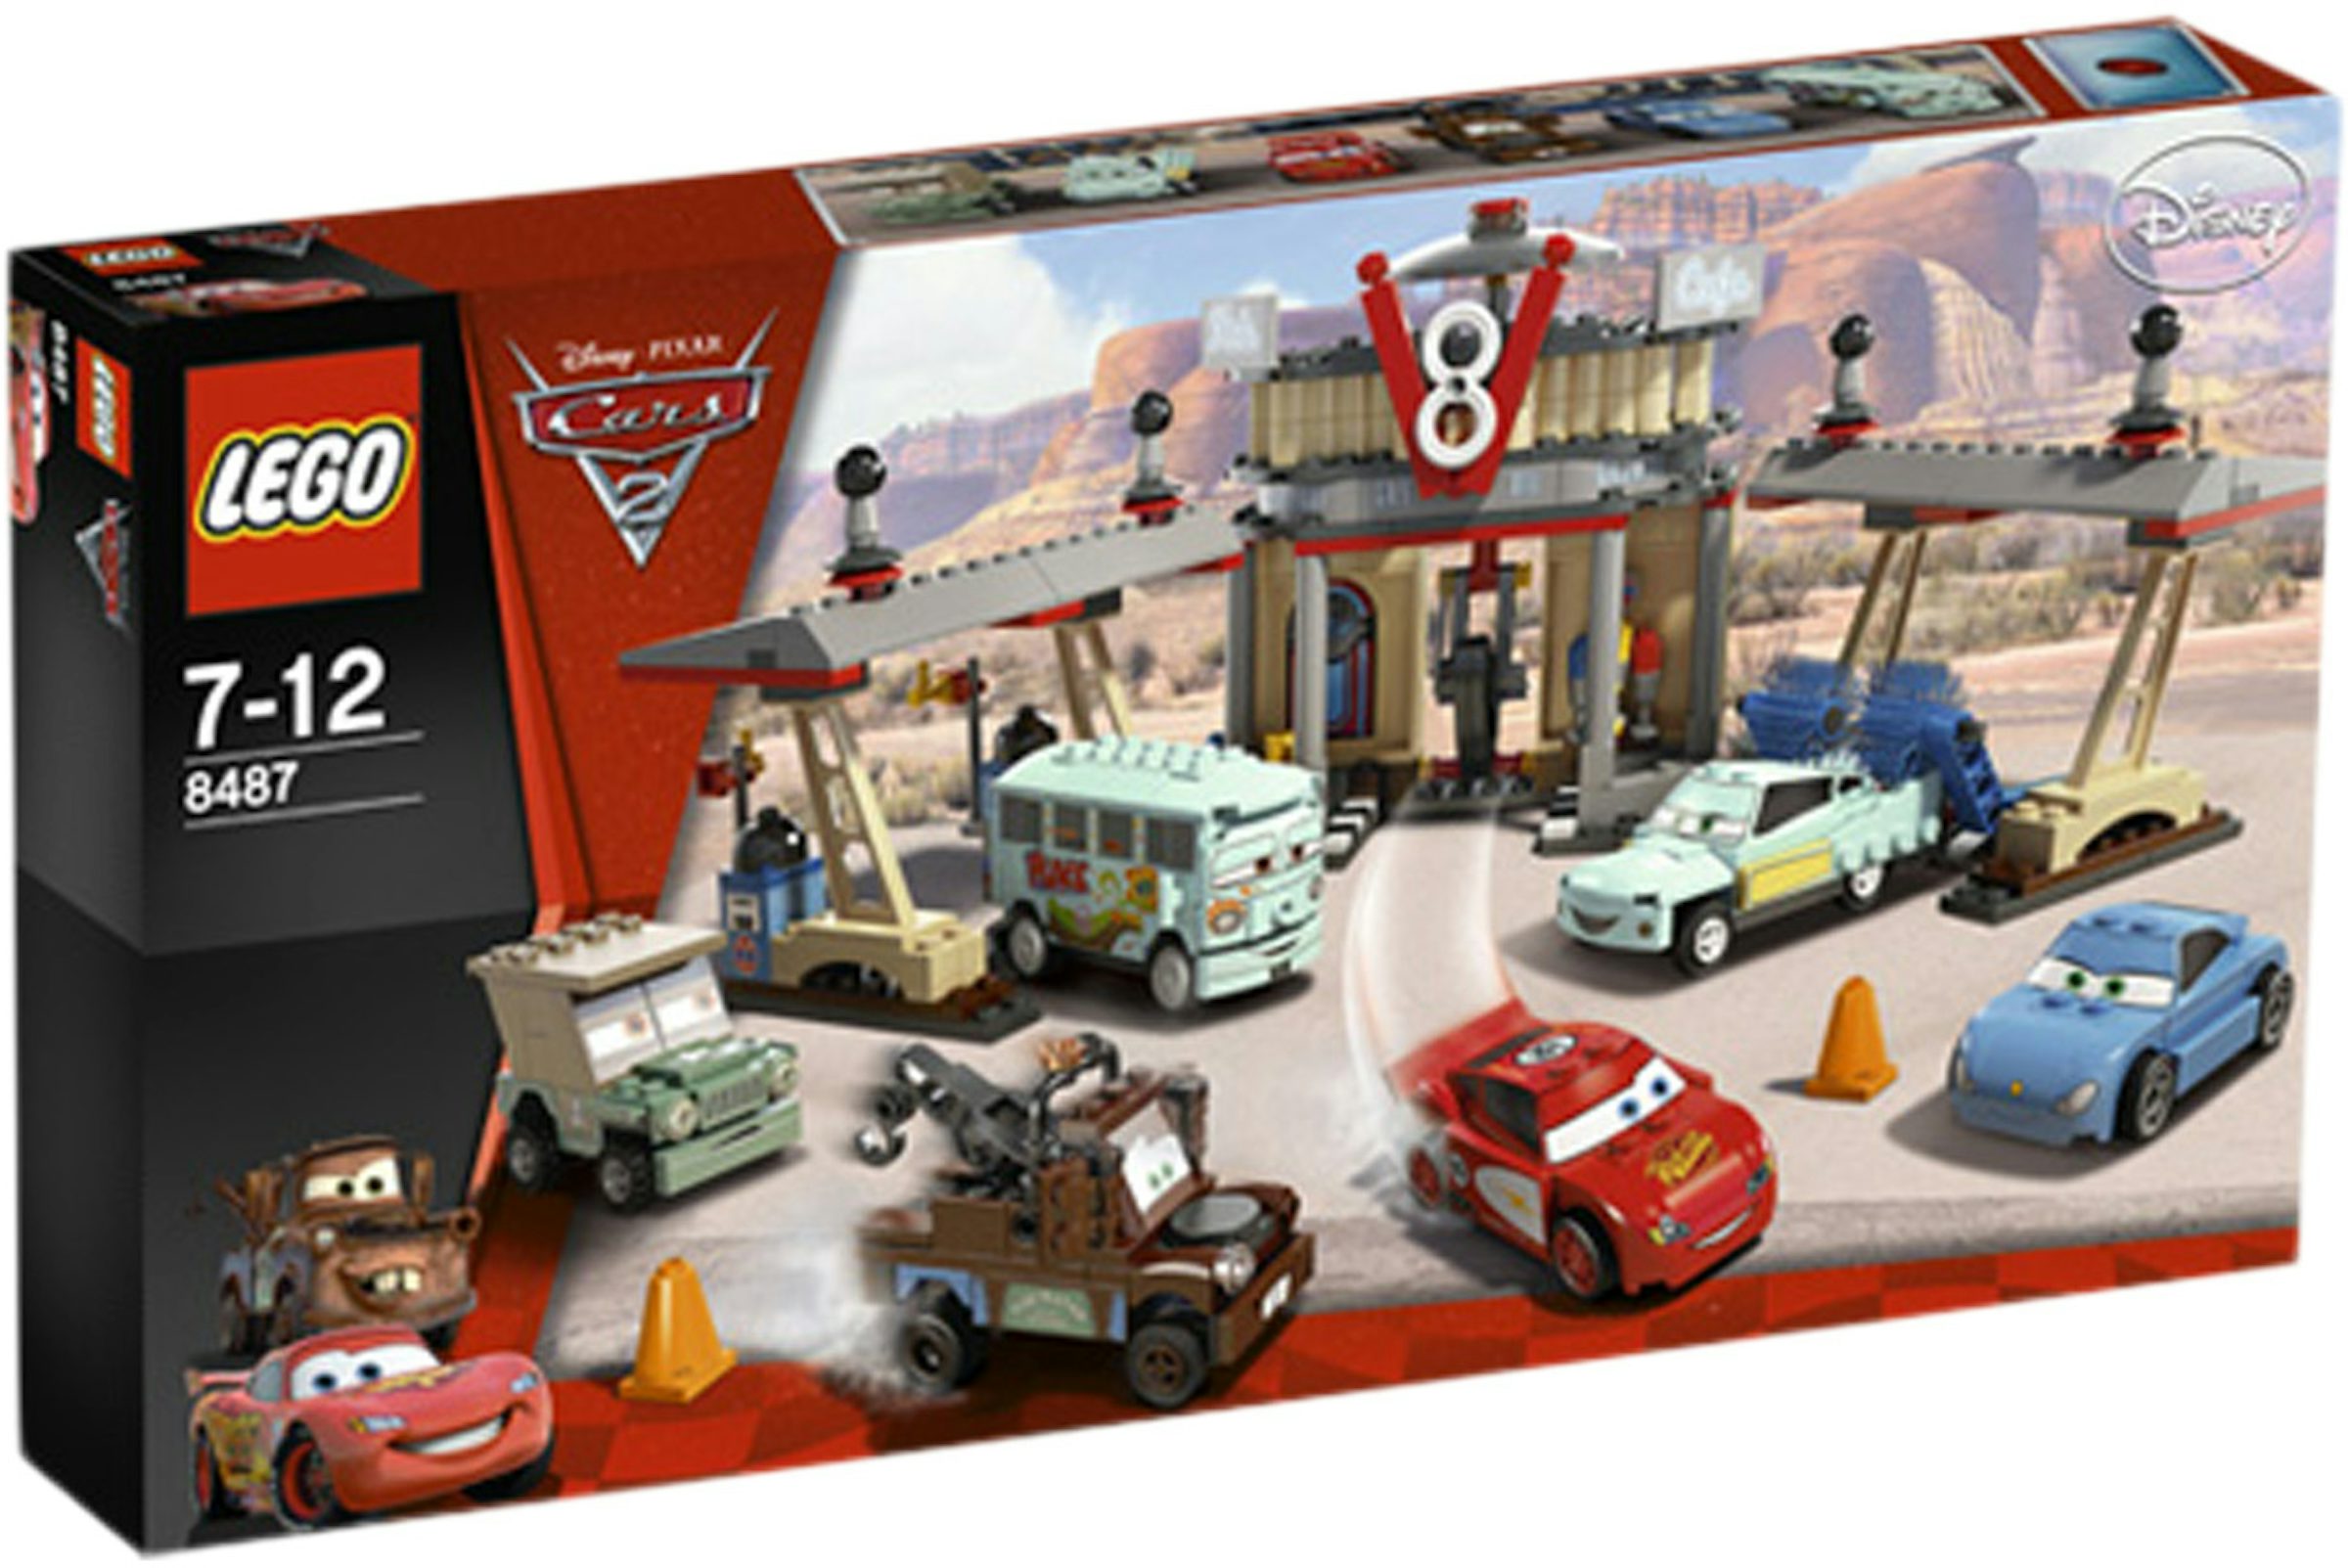 LEGO Cars Flo's V8 Cafe Set 8487 - US